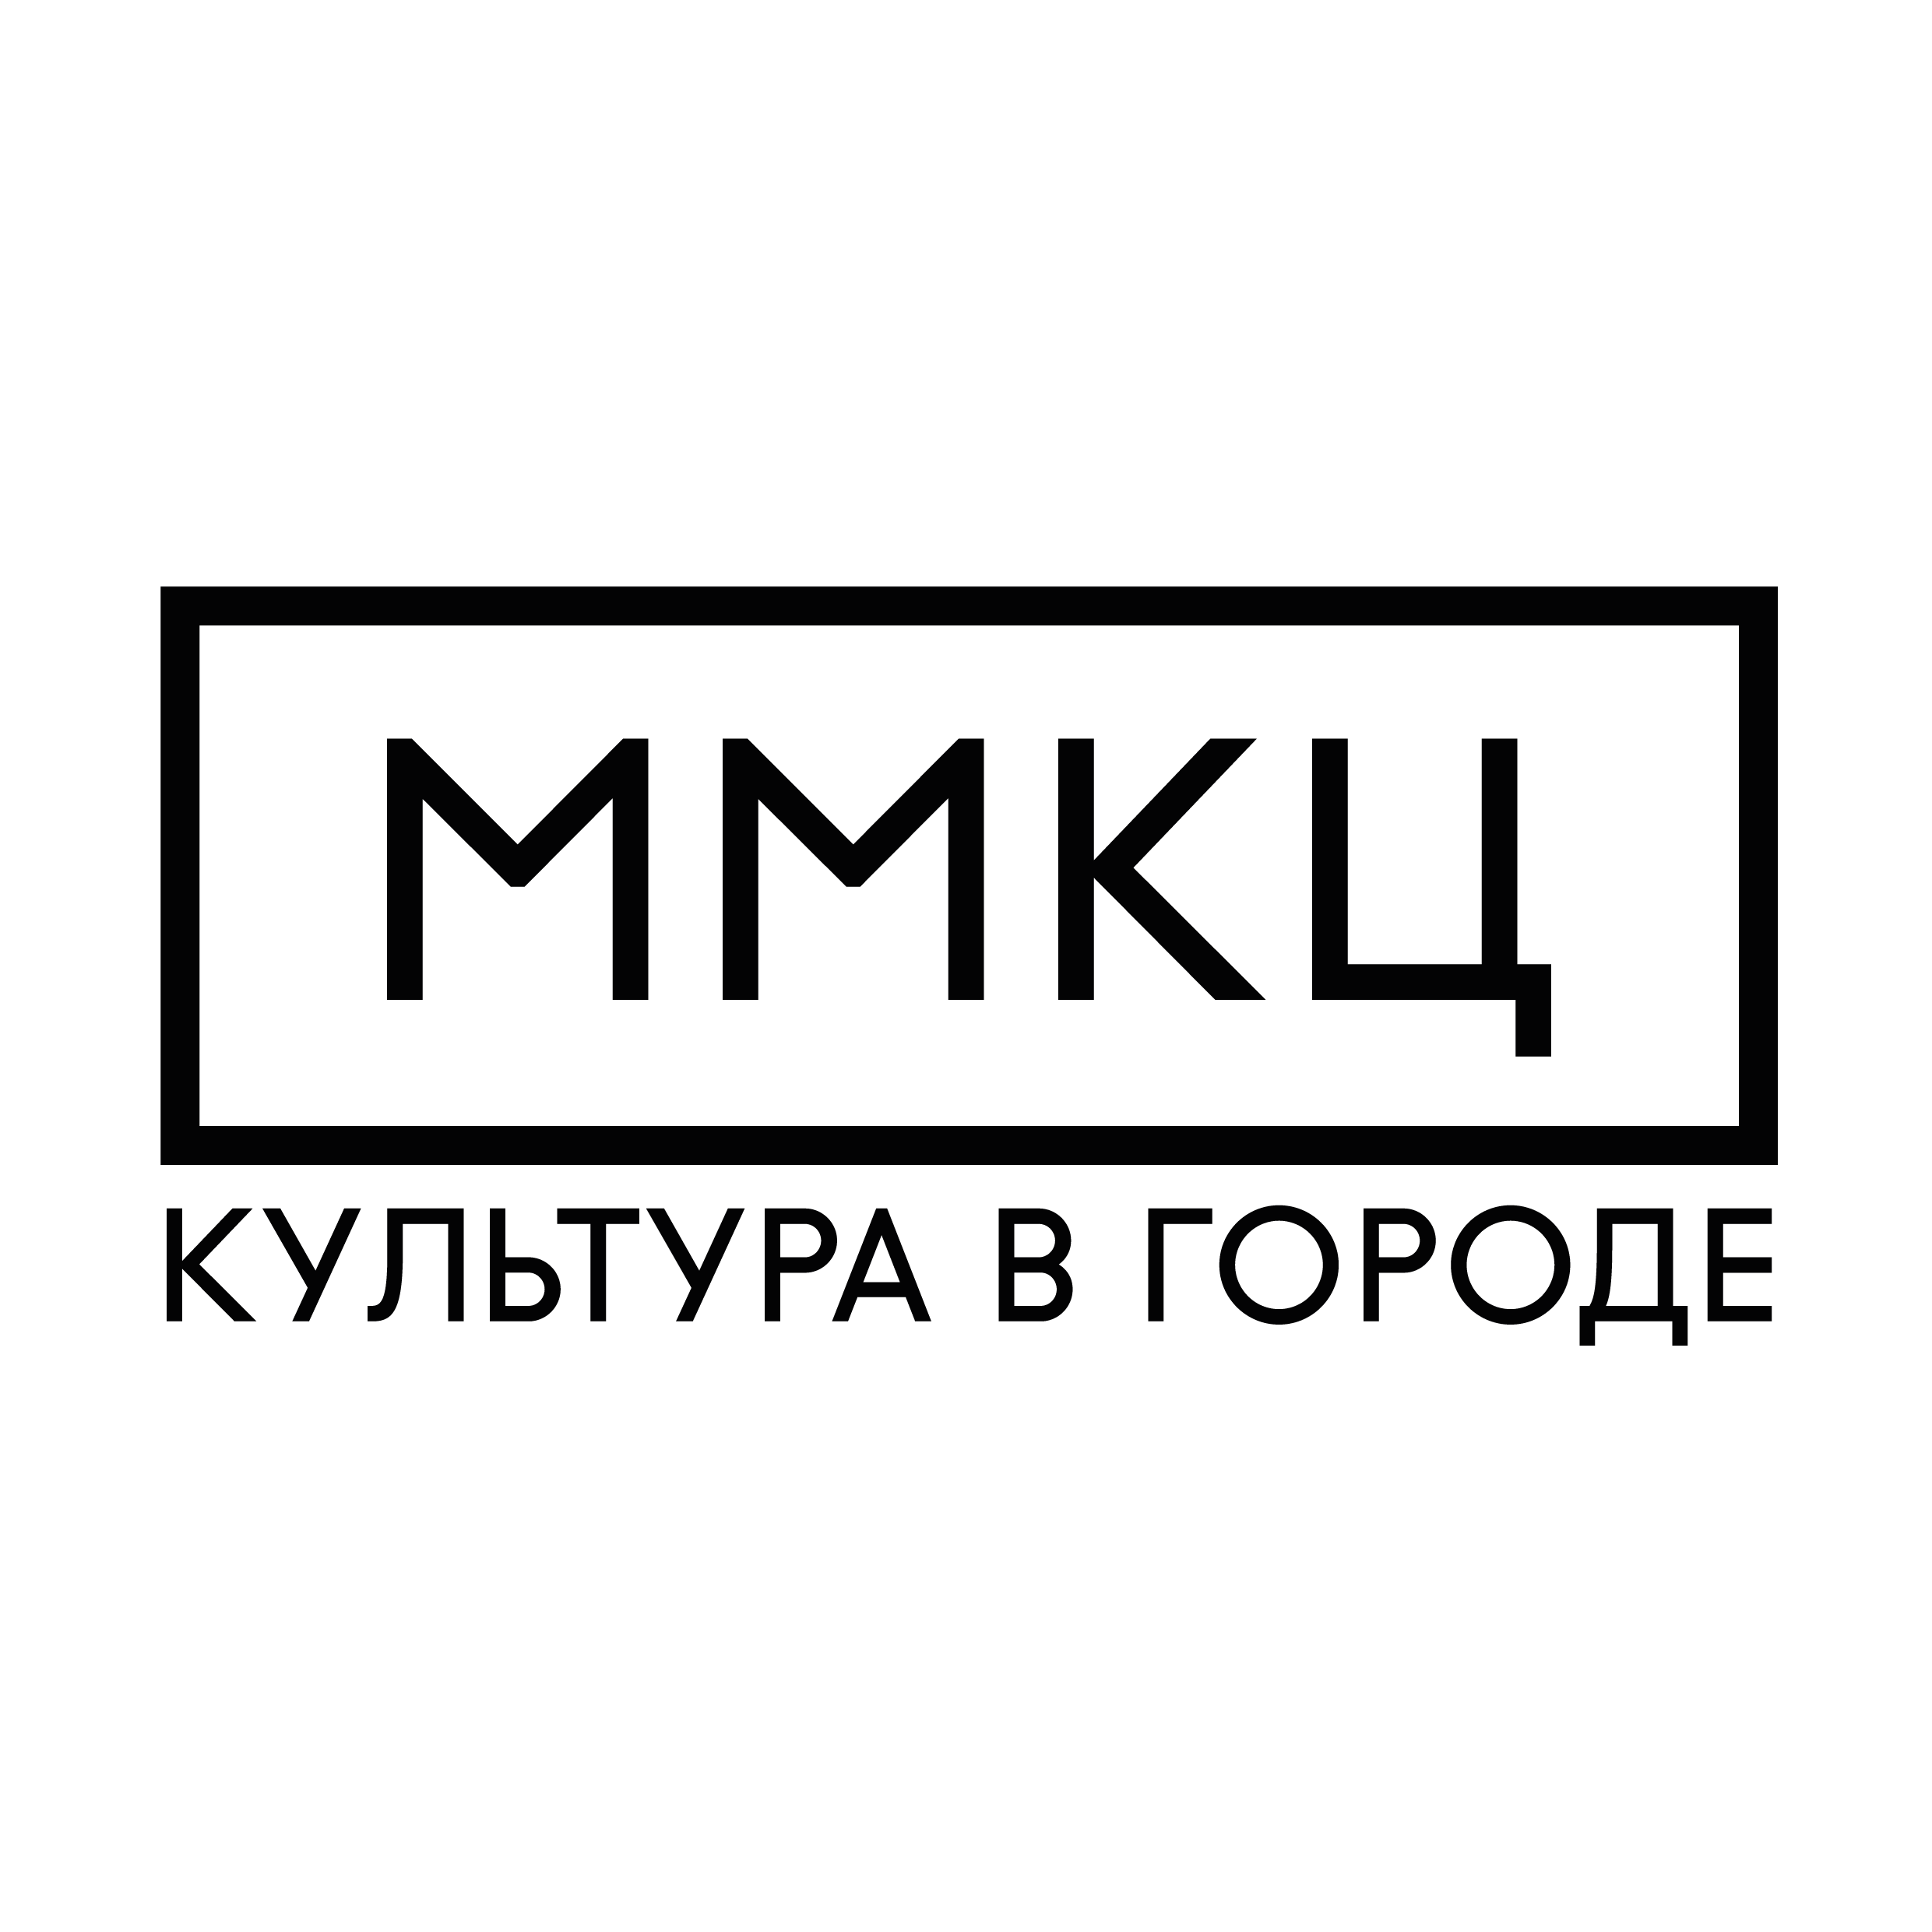 Profile logo